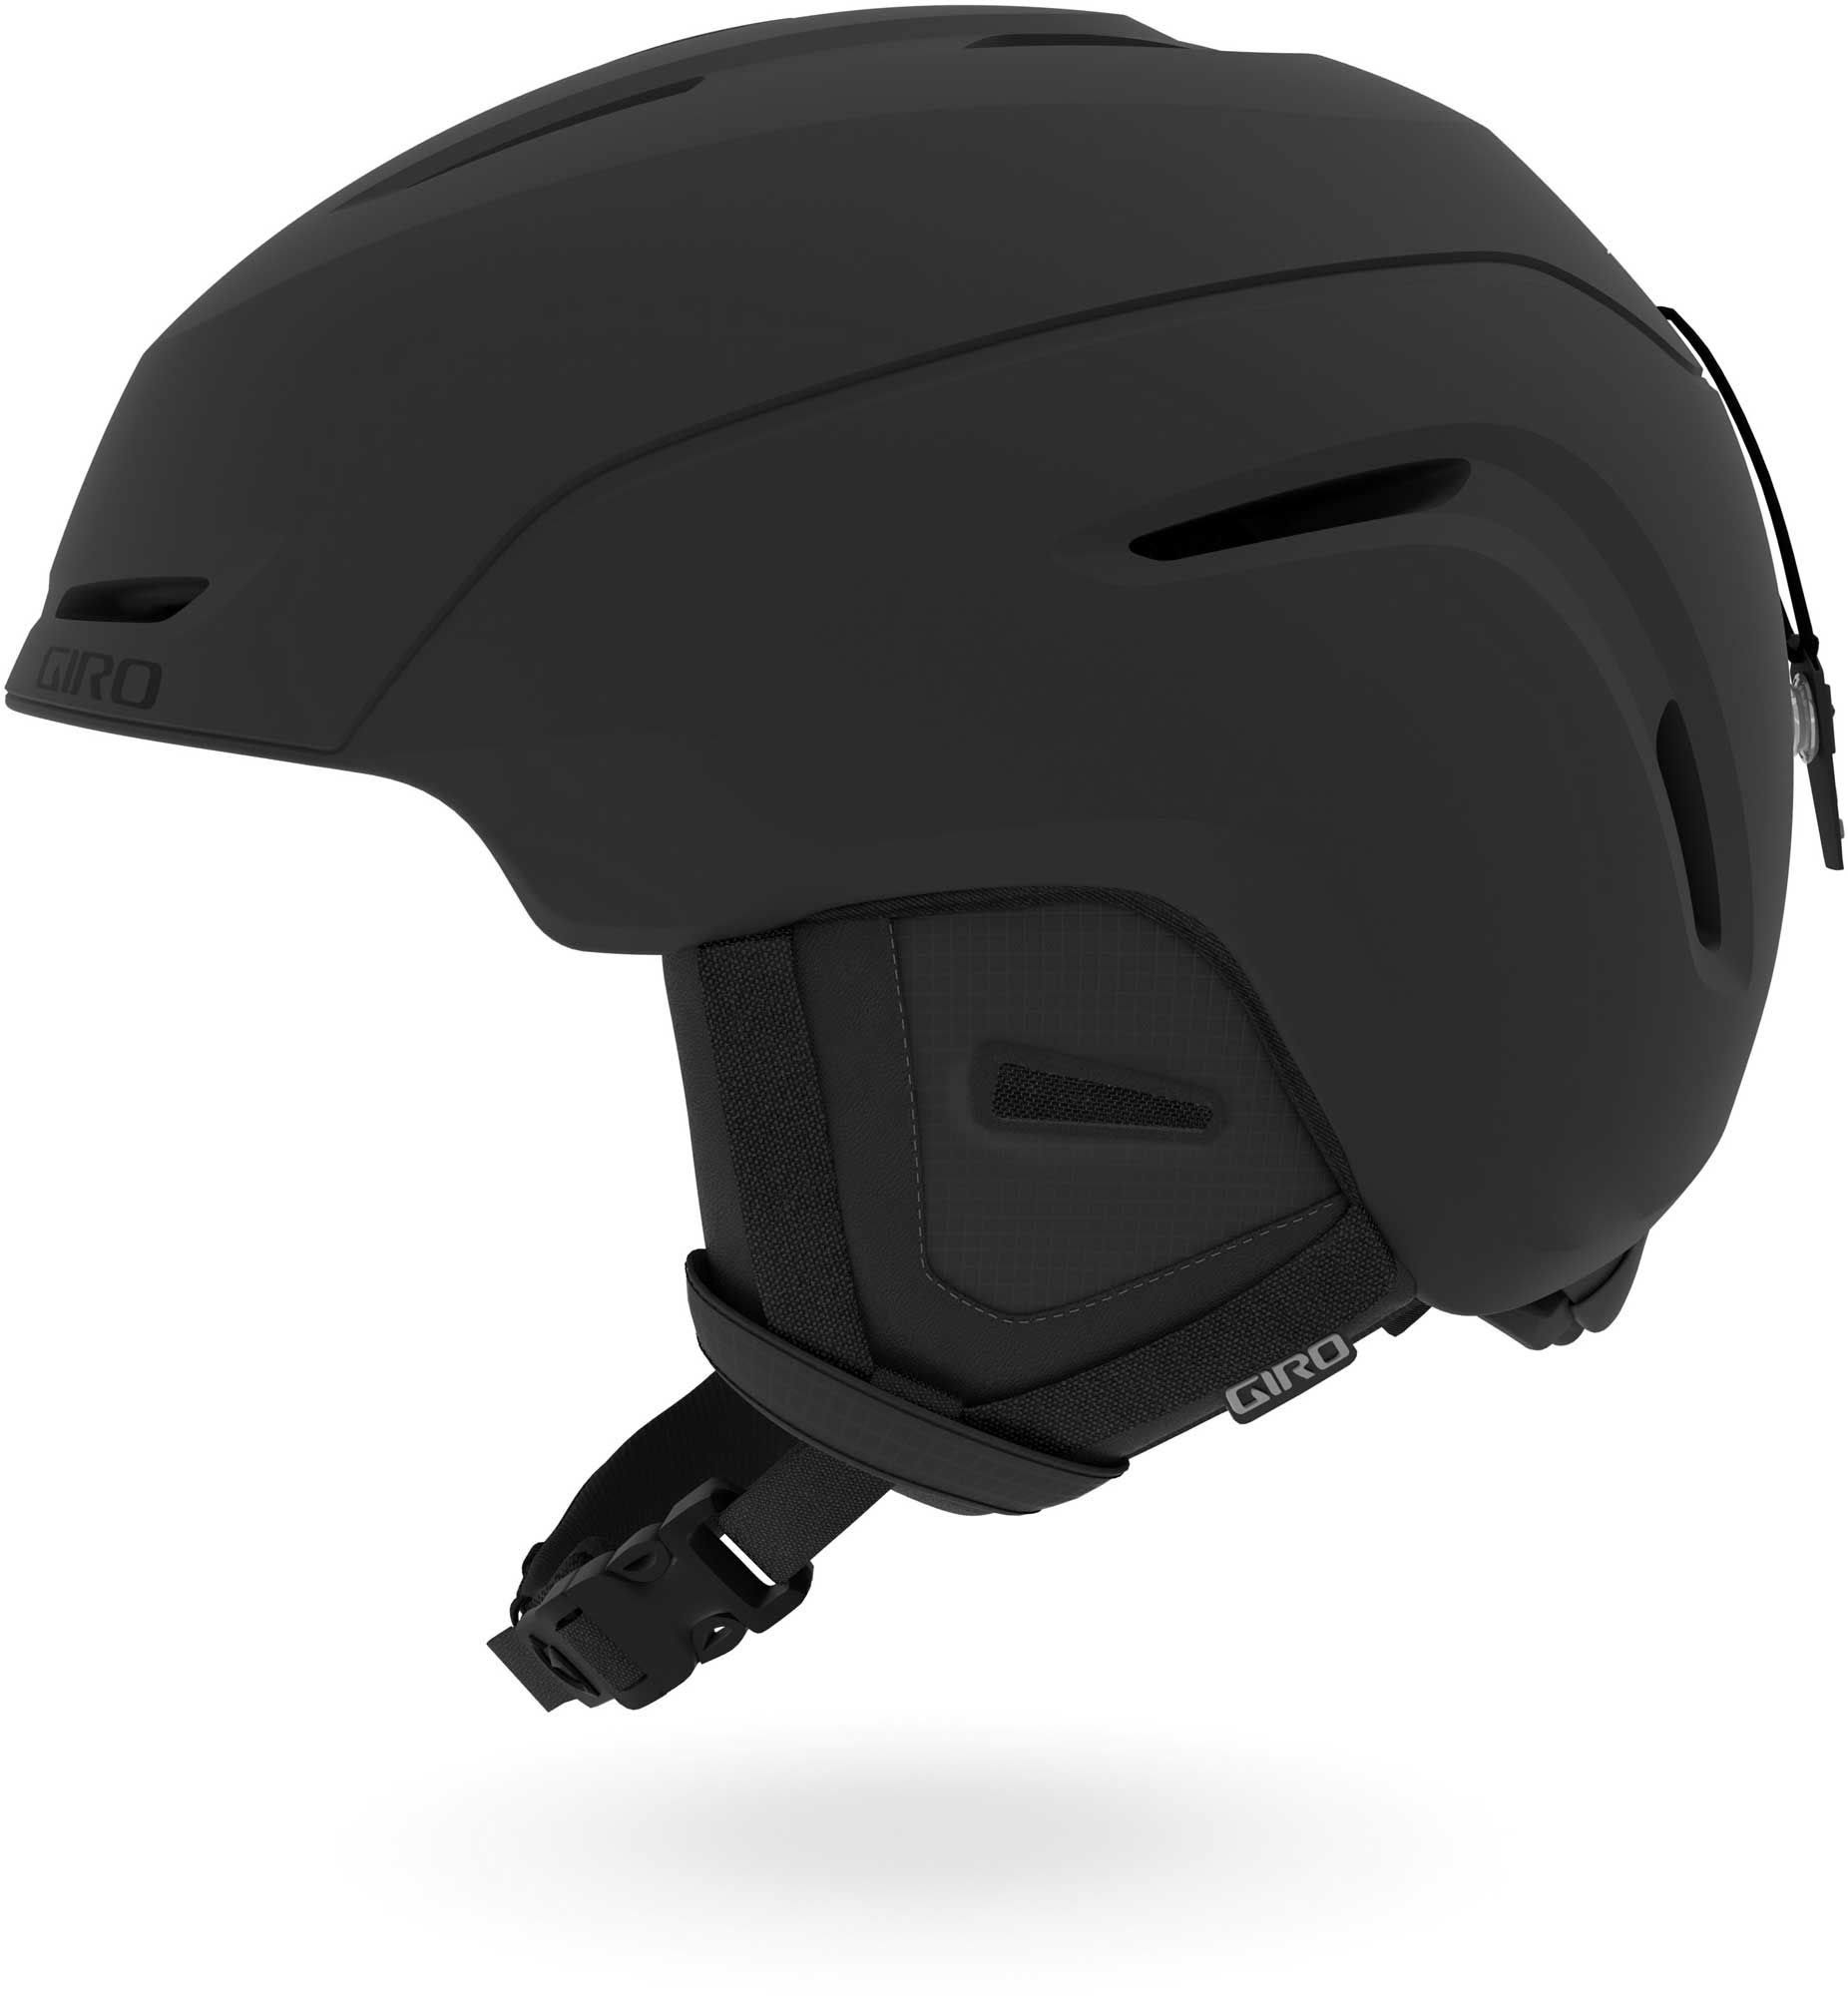 Giro Neo Helmet Matte Black - XL